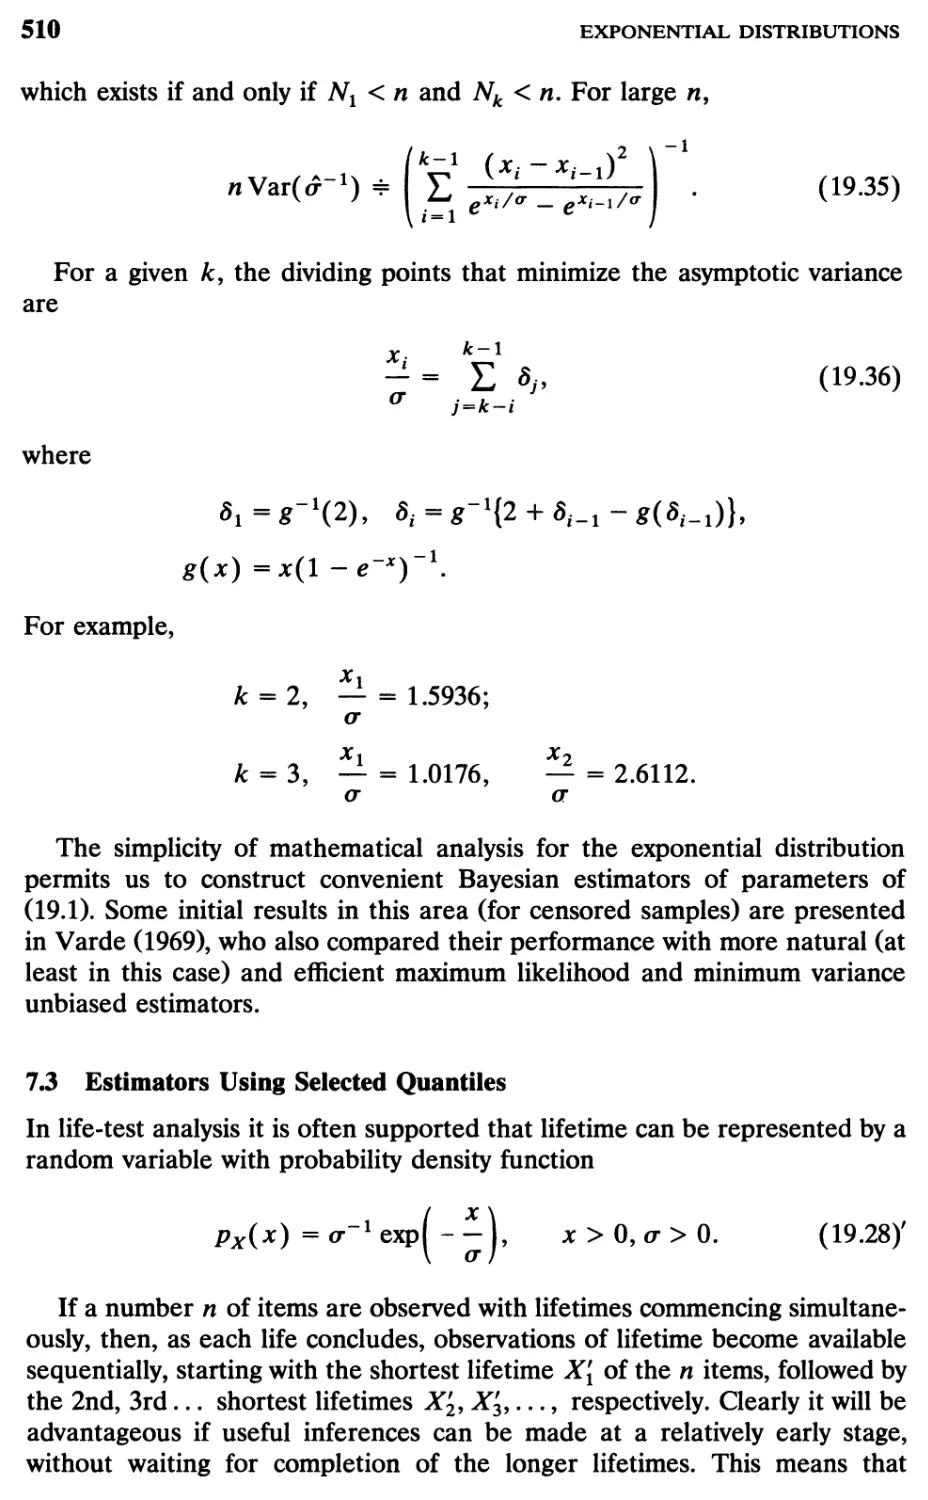 7.3 Estimators Using Selected Quantiles, 510